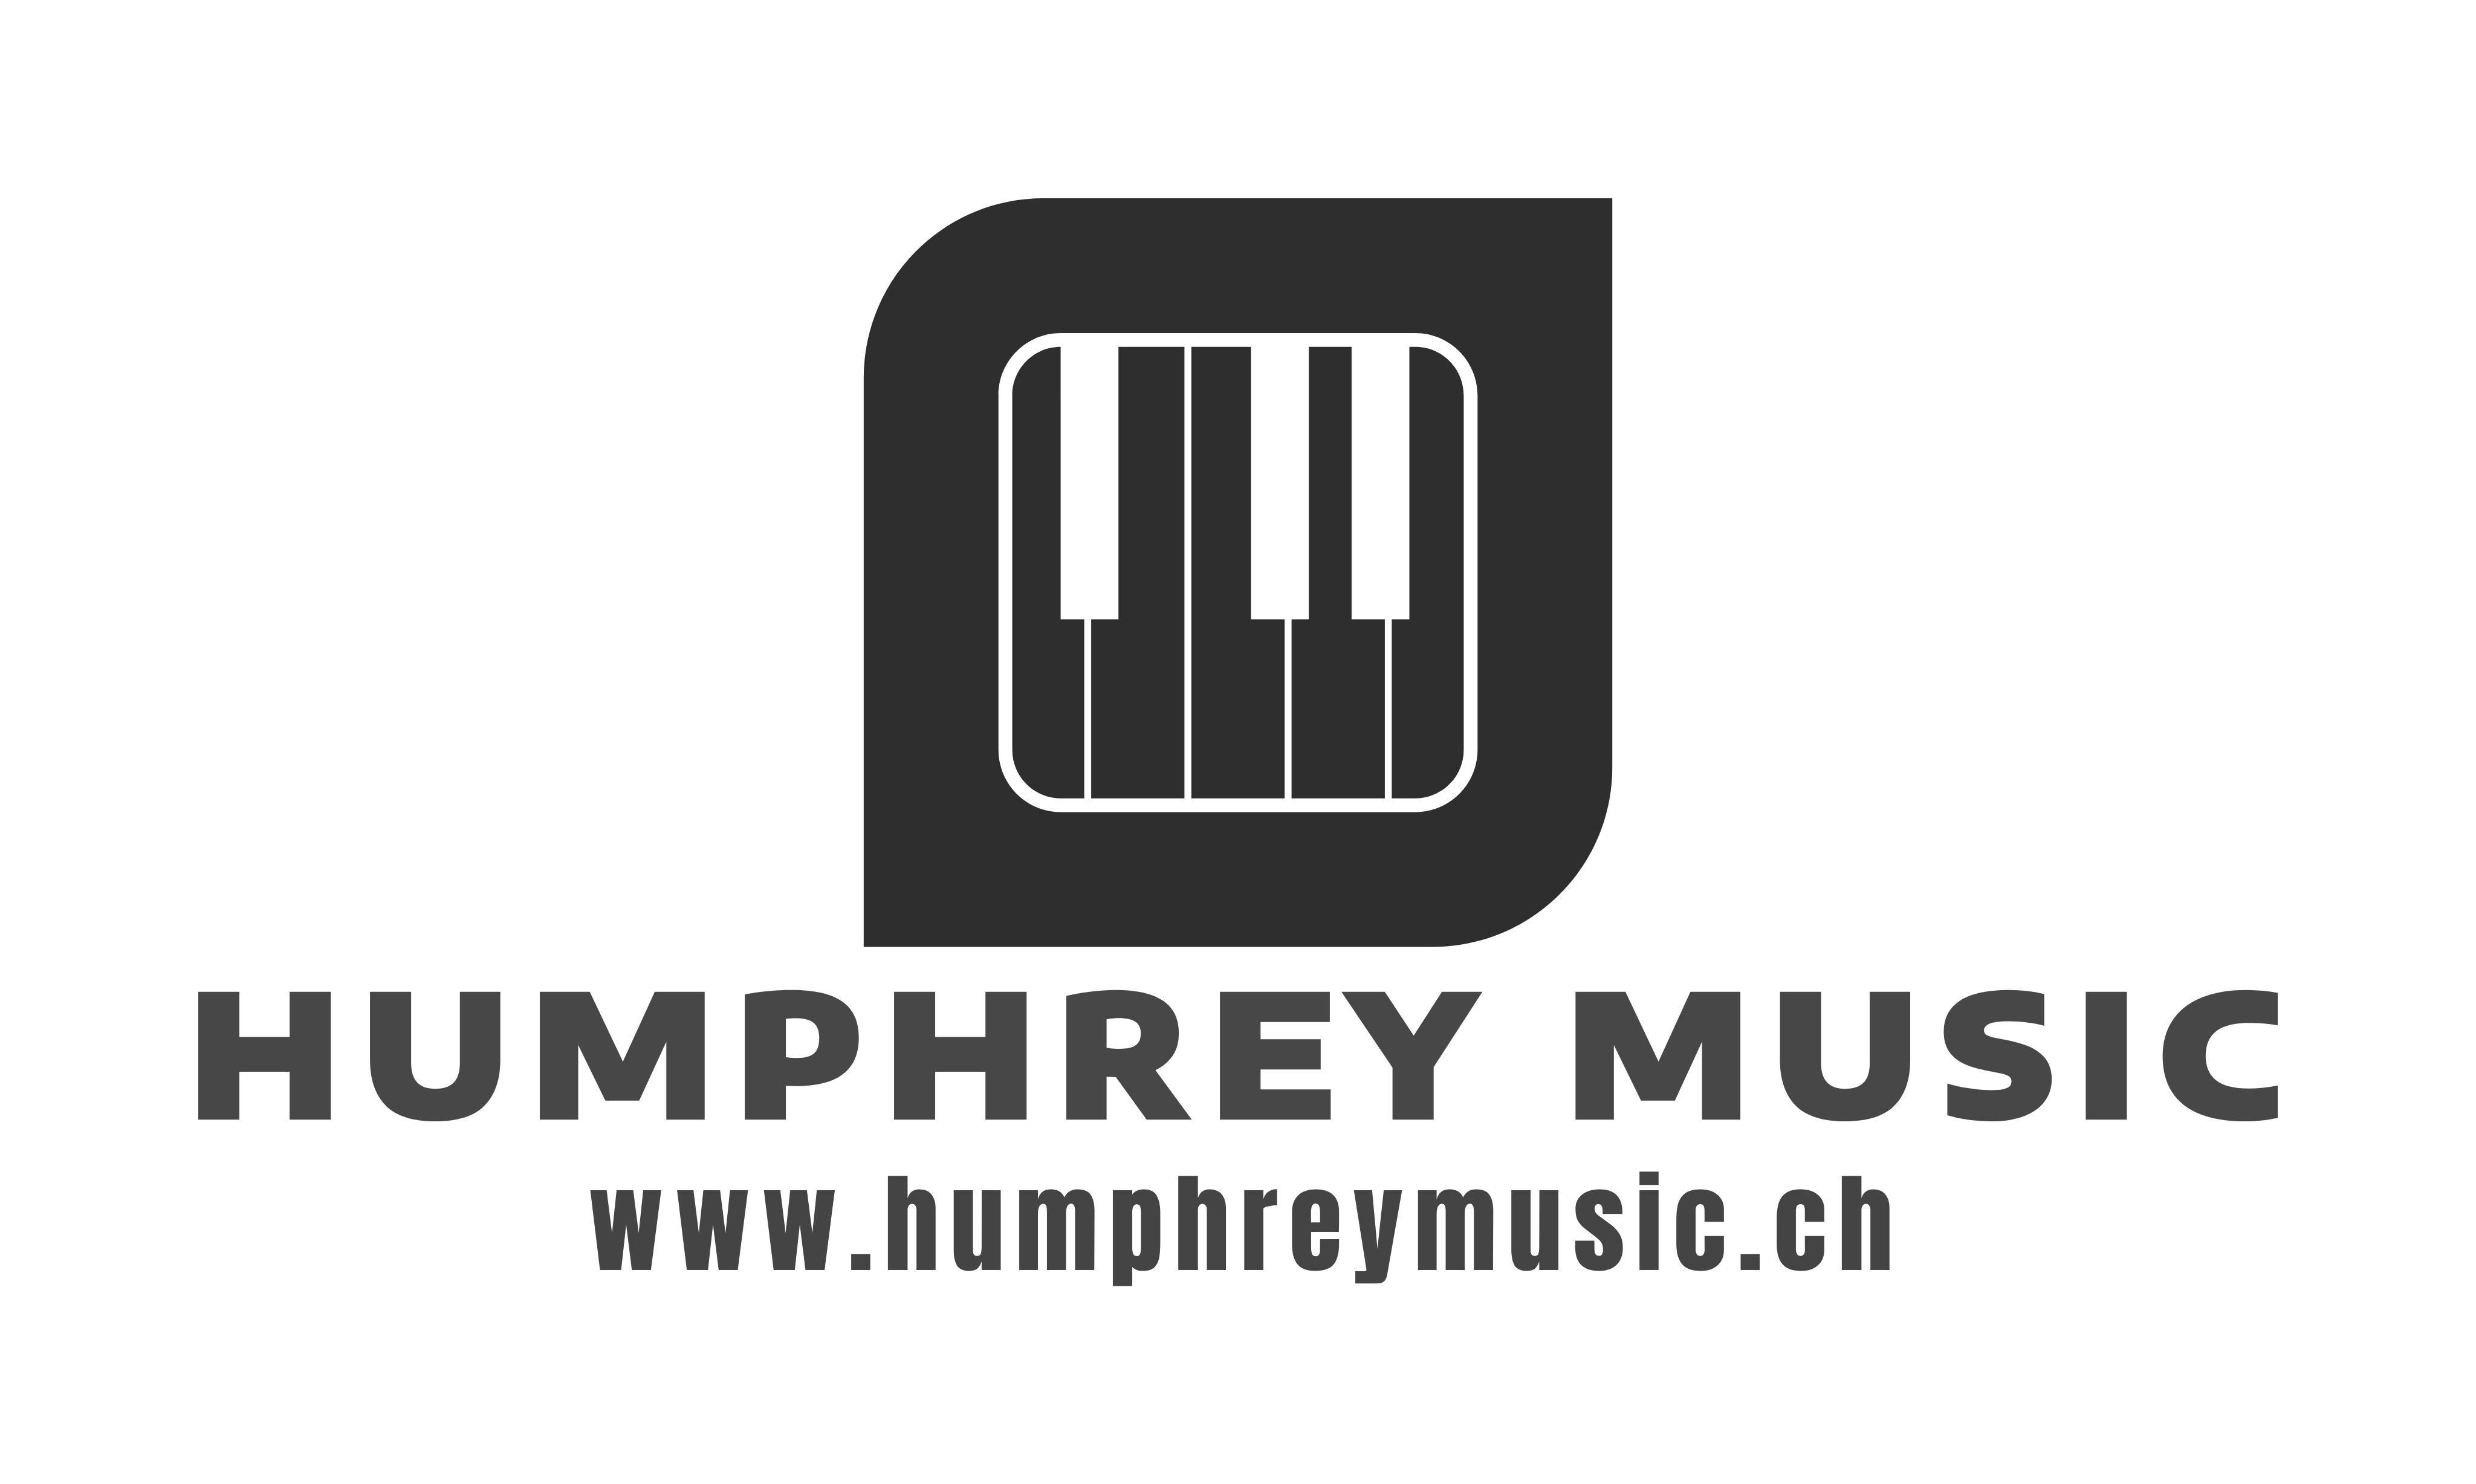 Humphrey Music